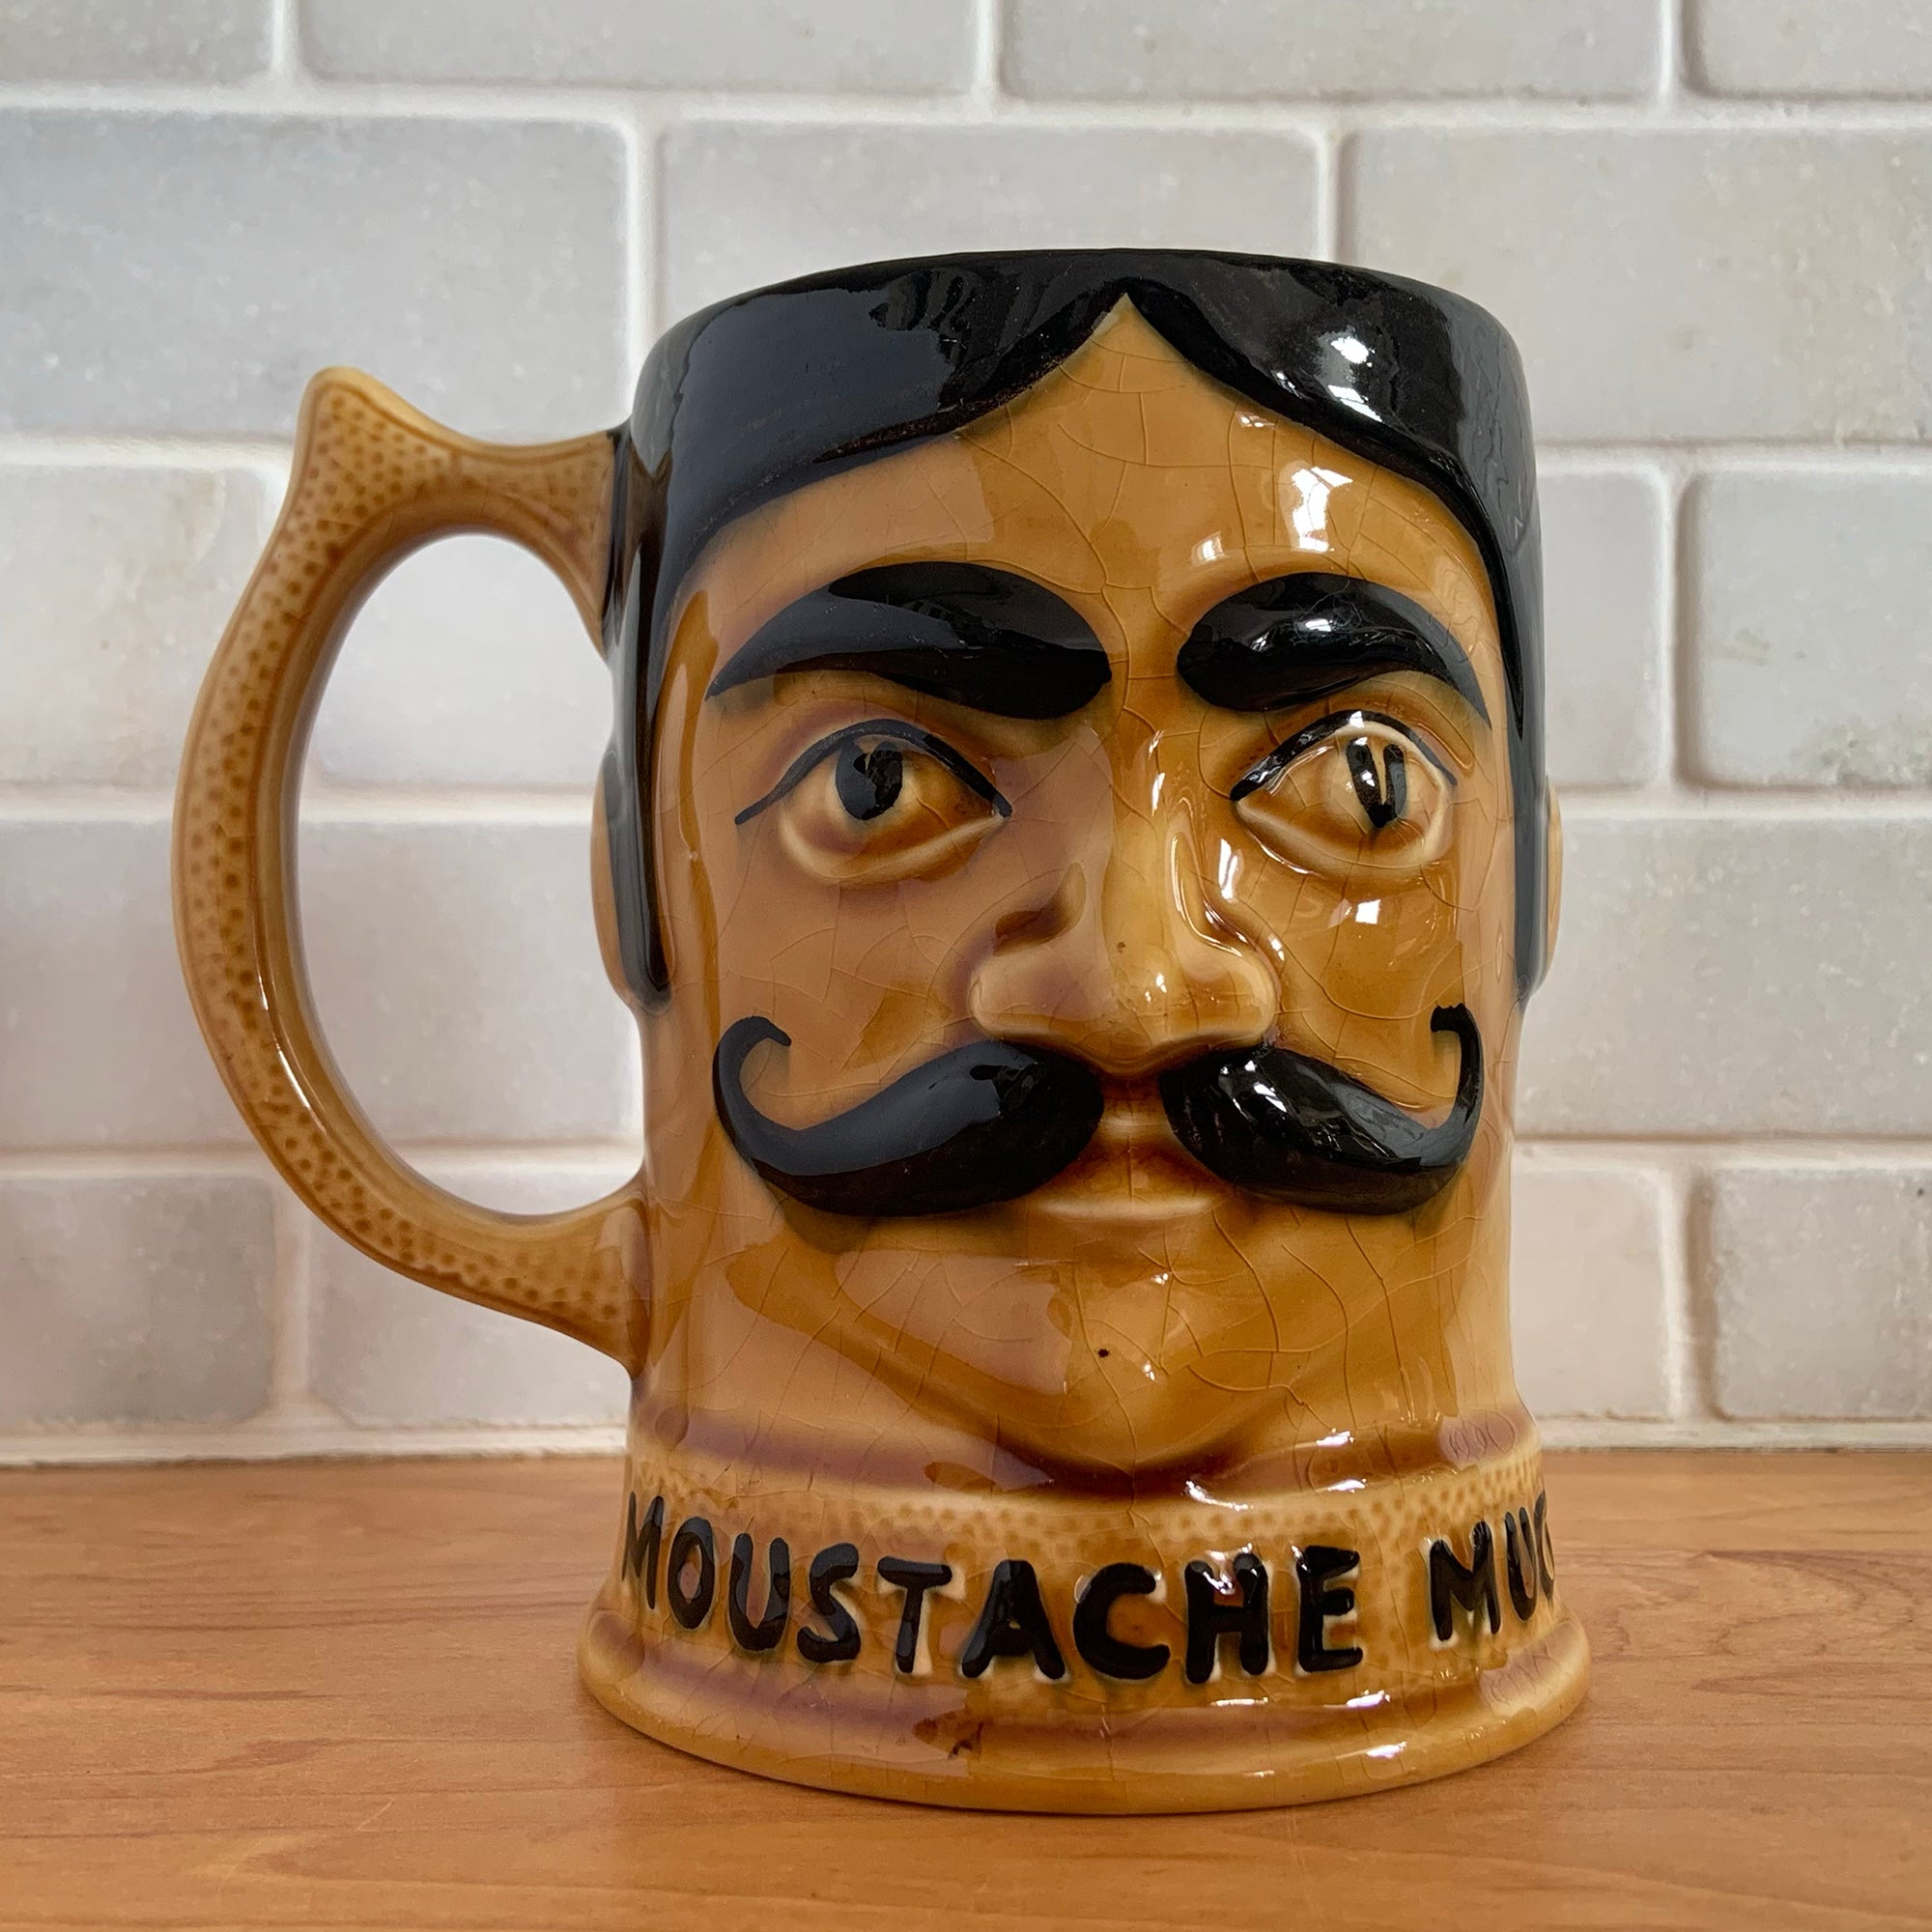 KEN THE NAME OF: KEN & MEANING OF, Ceramic Coffee Cup / Mug, Vintage 